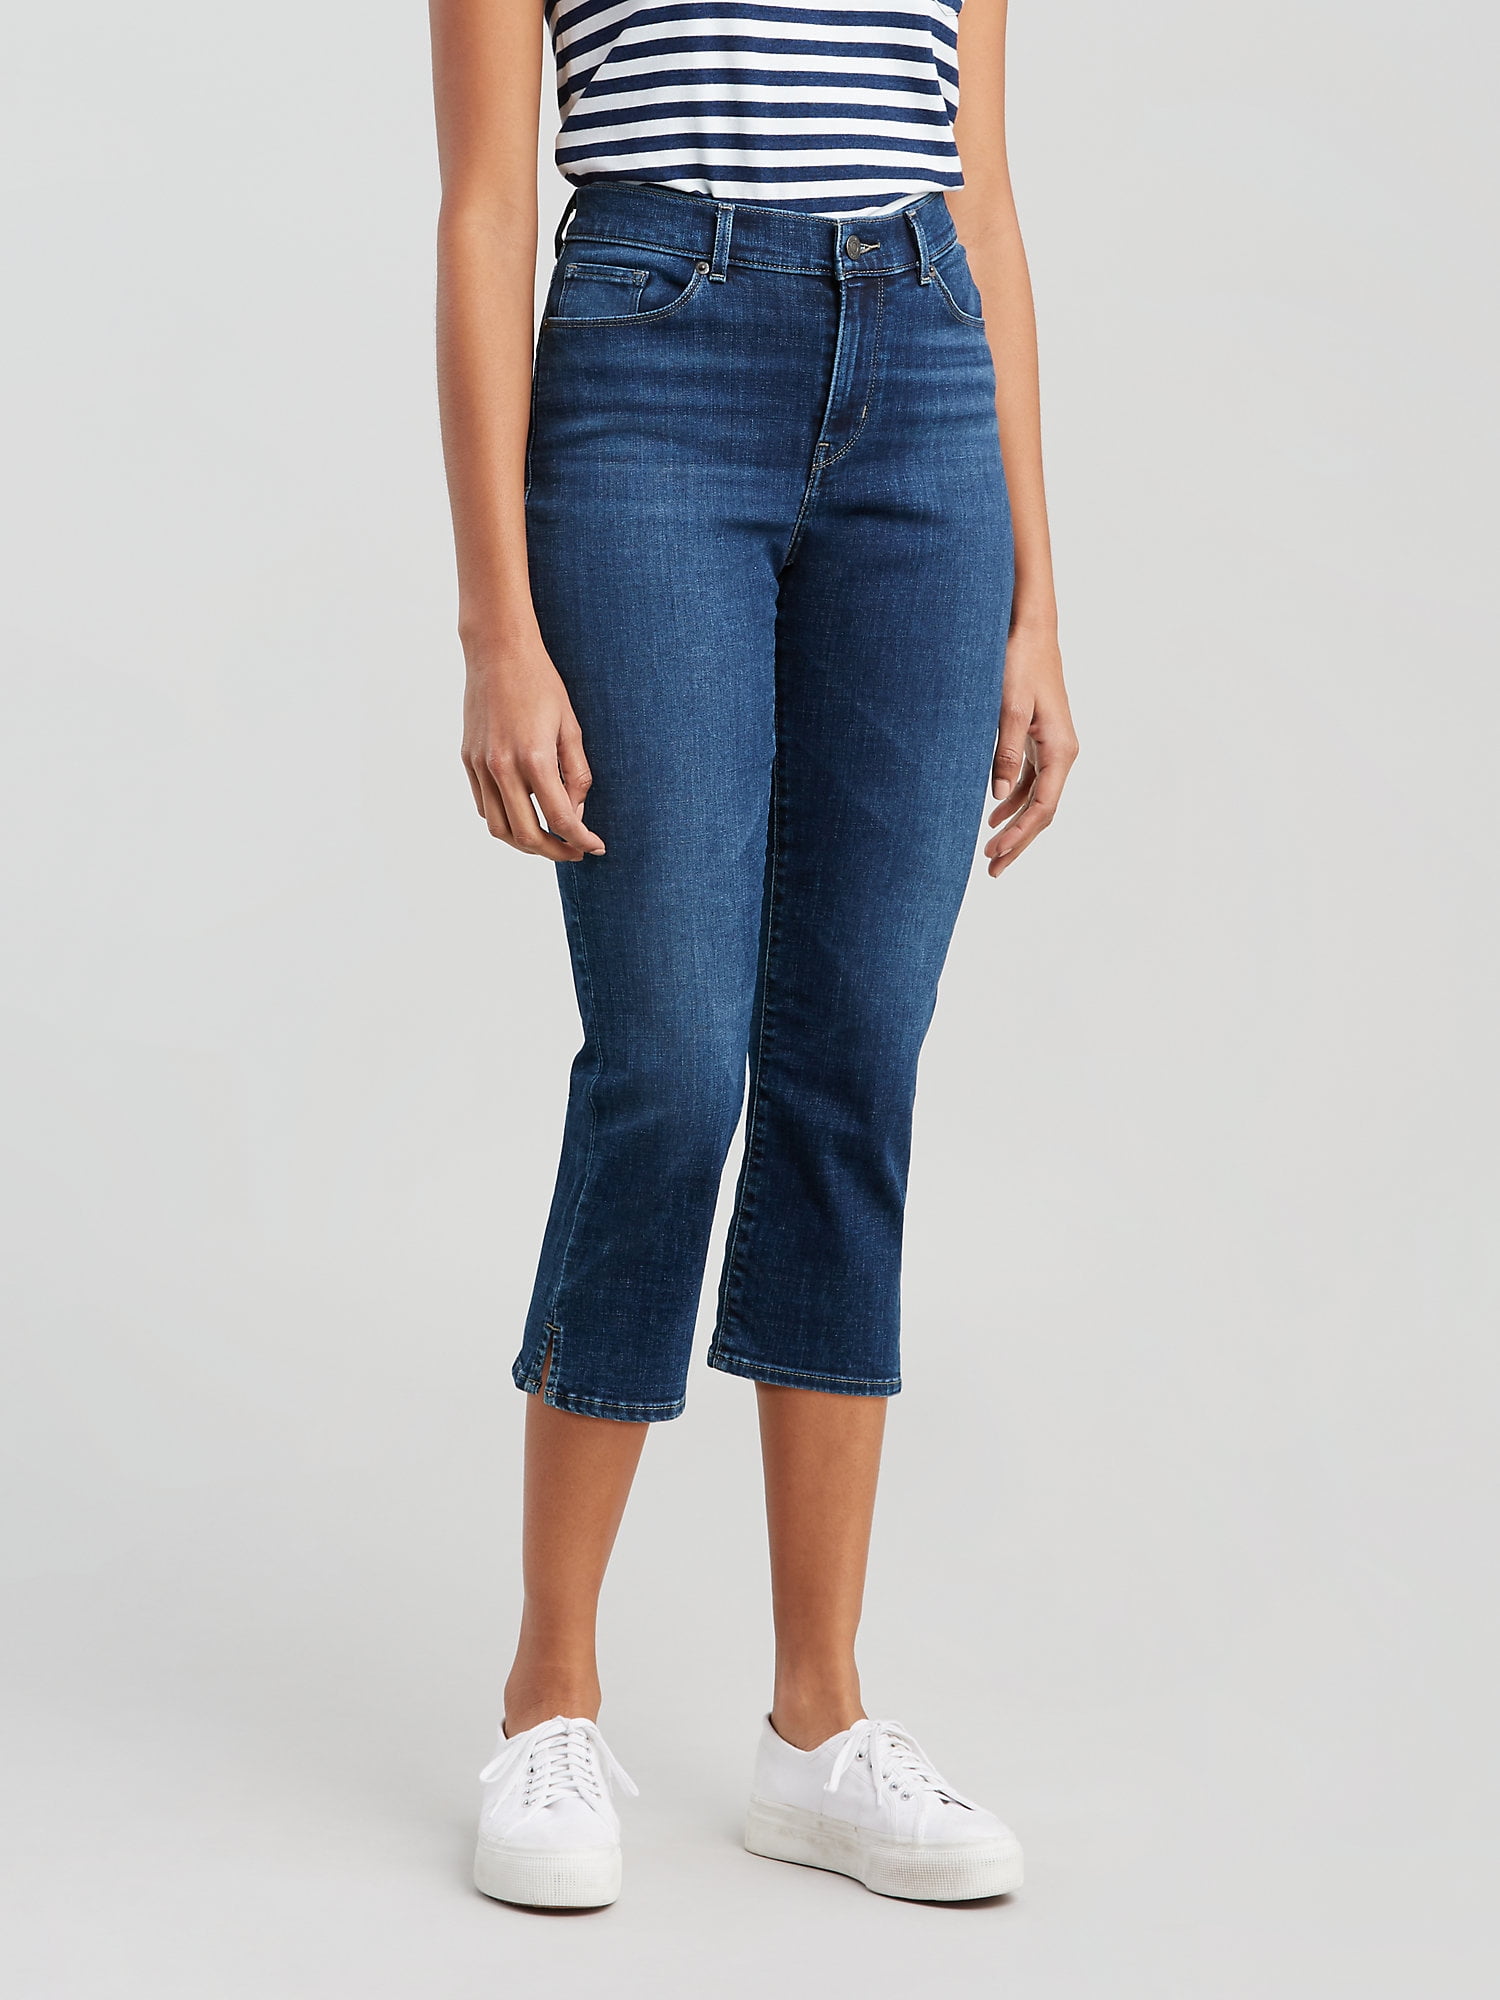 levi womens capri jeans Cheaper Than 